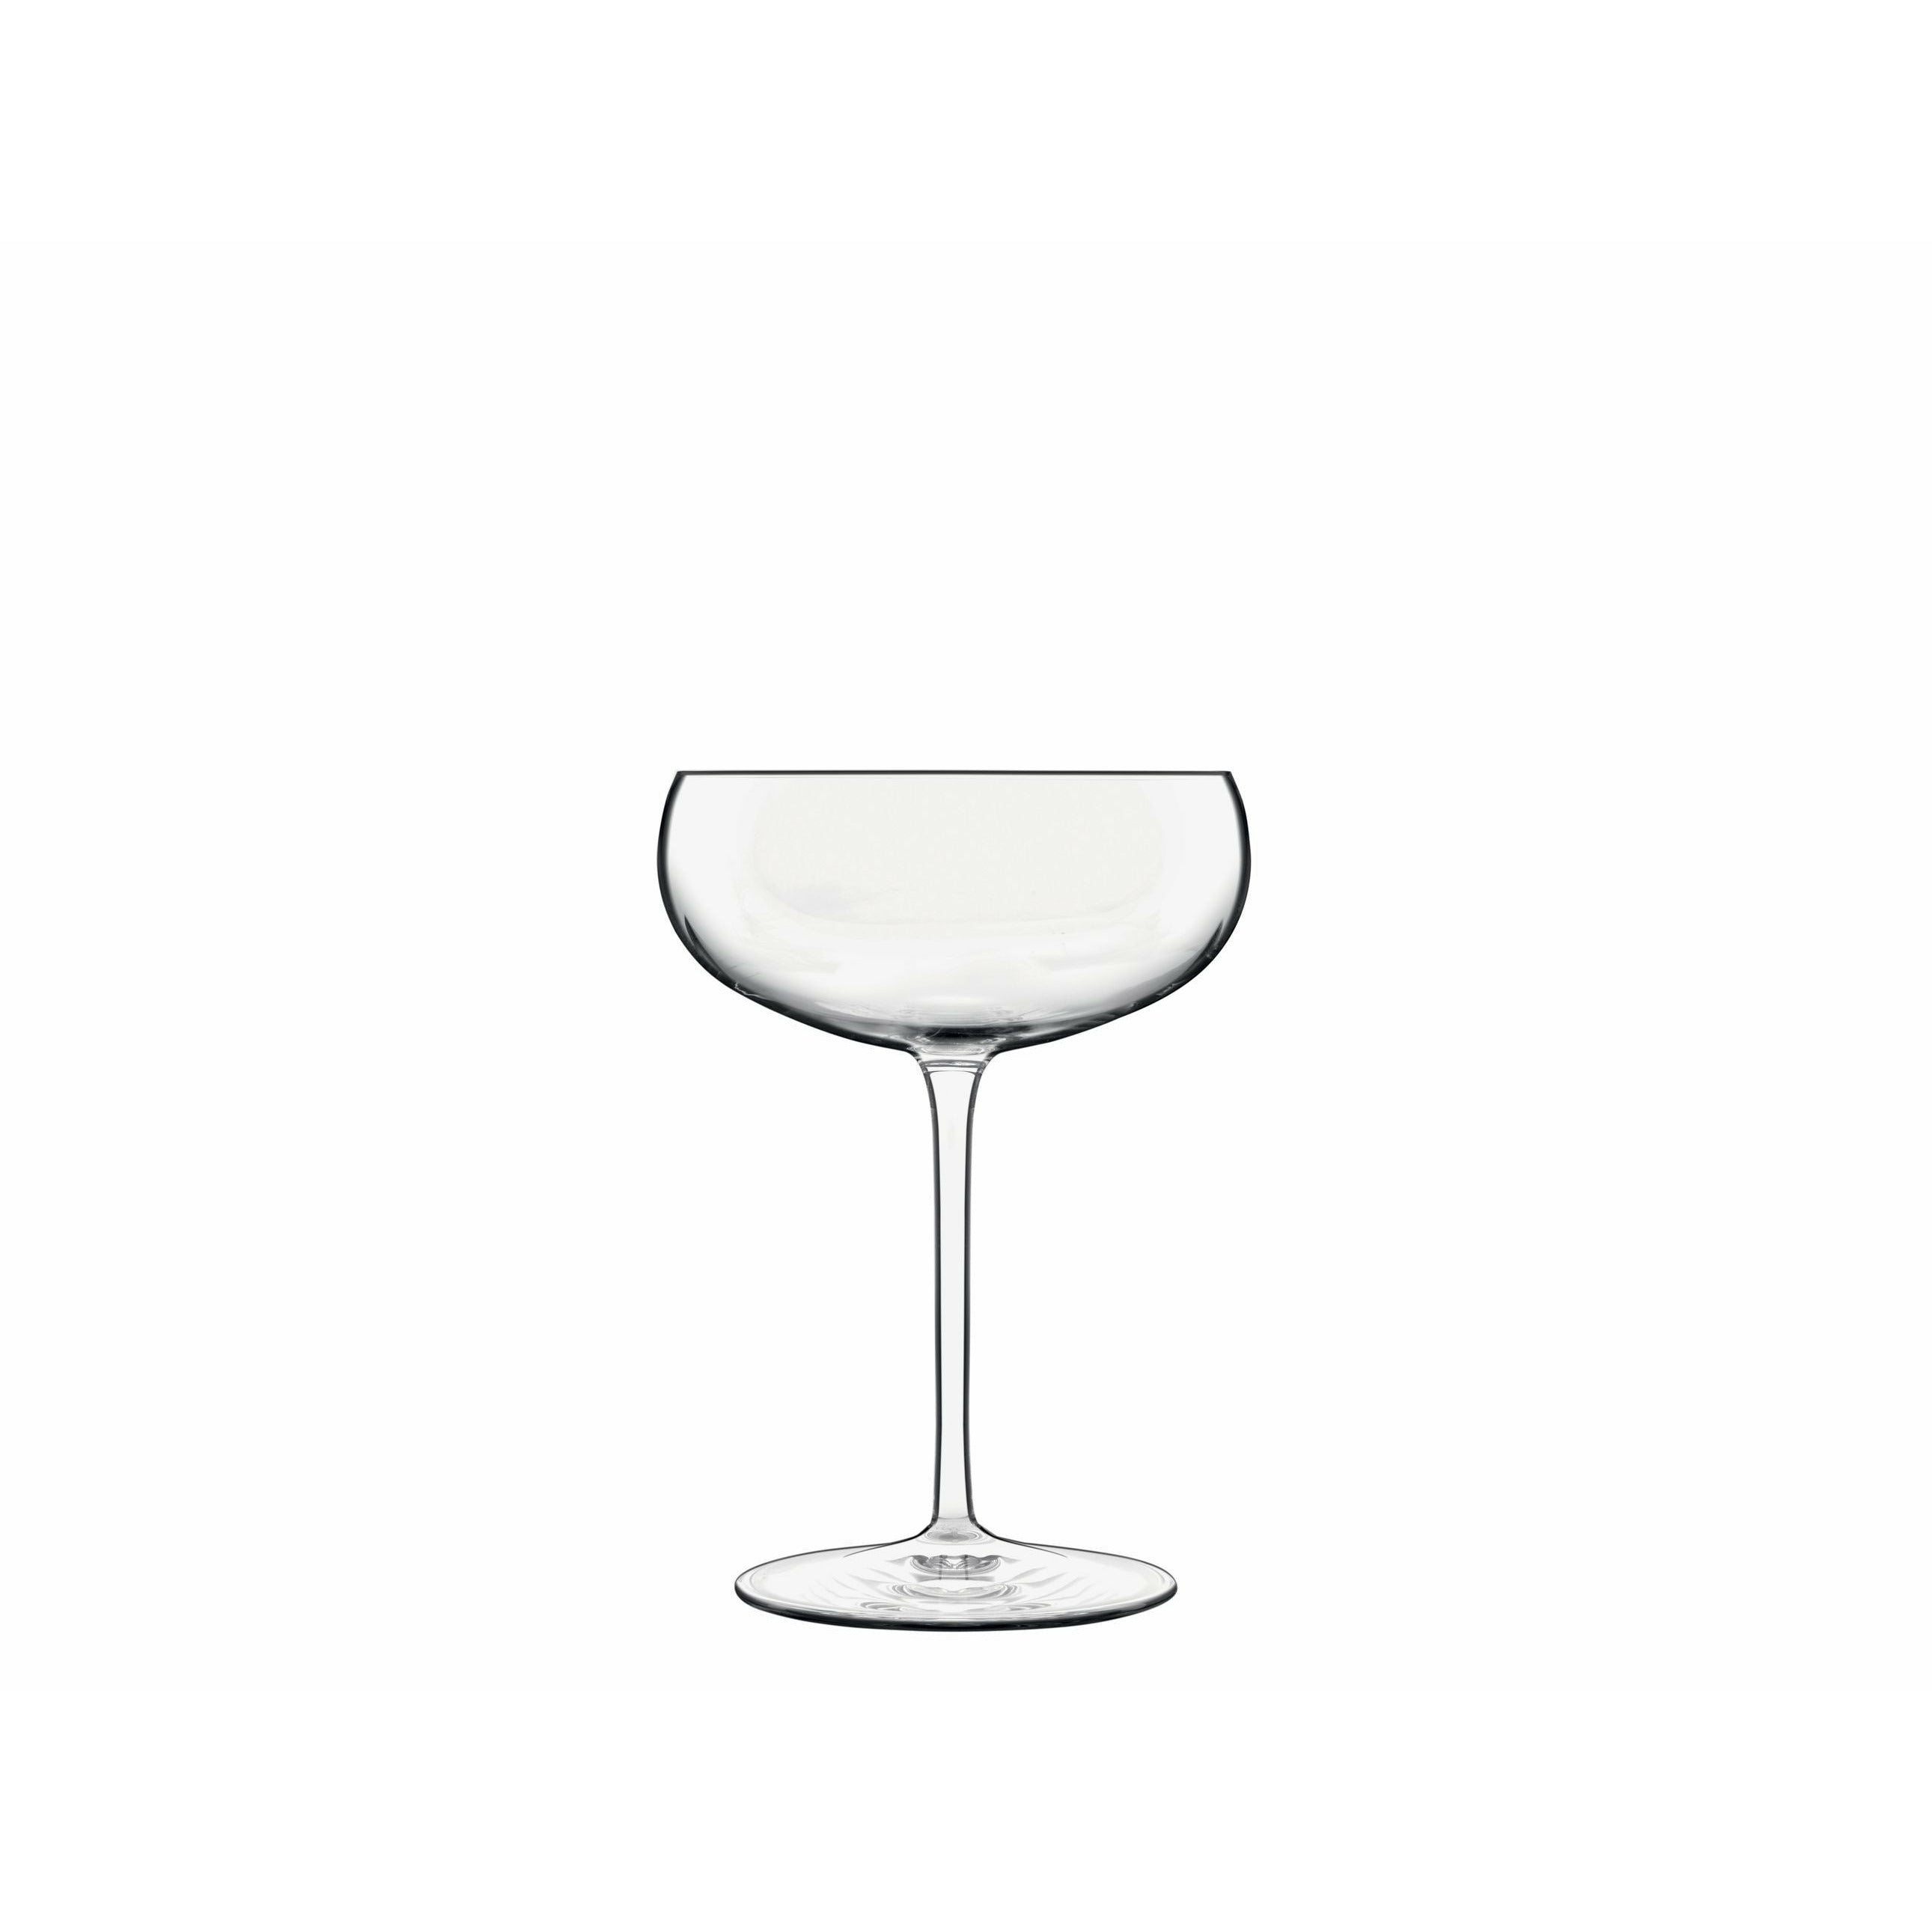 Luigi Bormioli Verre à cocktails de talismano / verre martini, 2 pièces